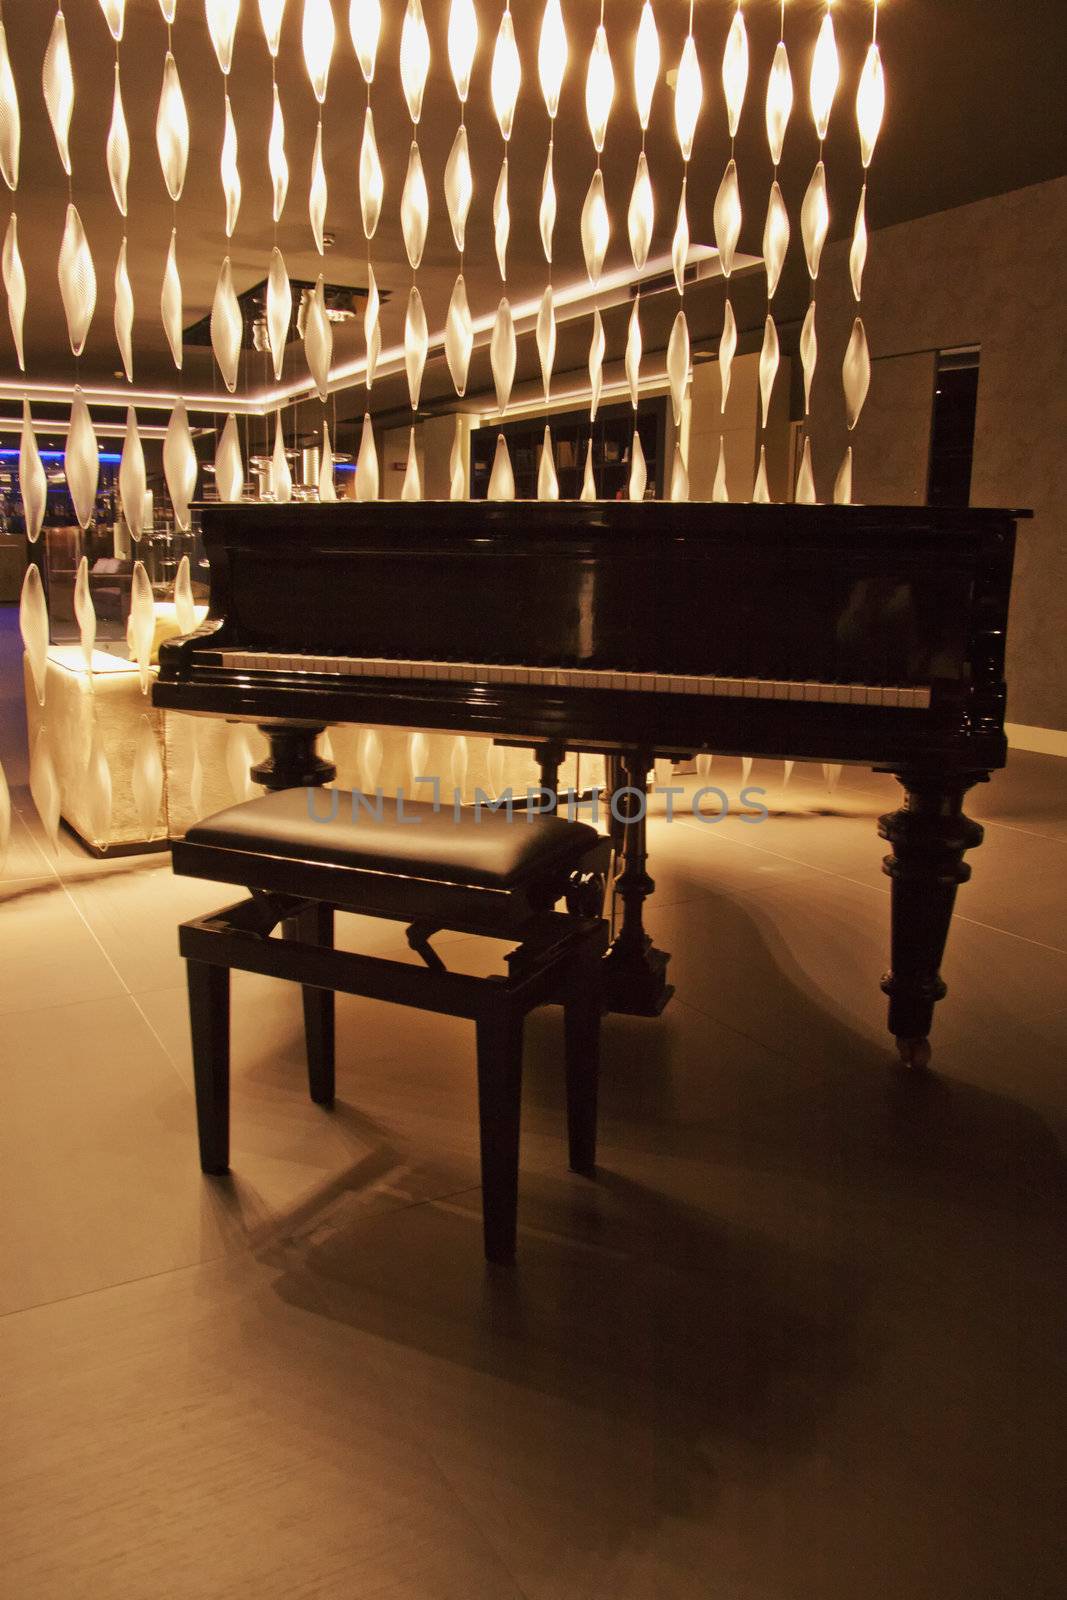 An elegant black piano in a lobby